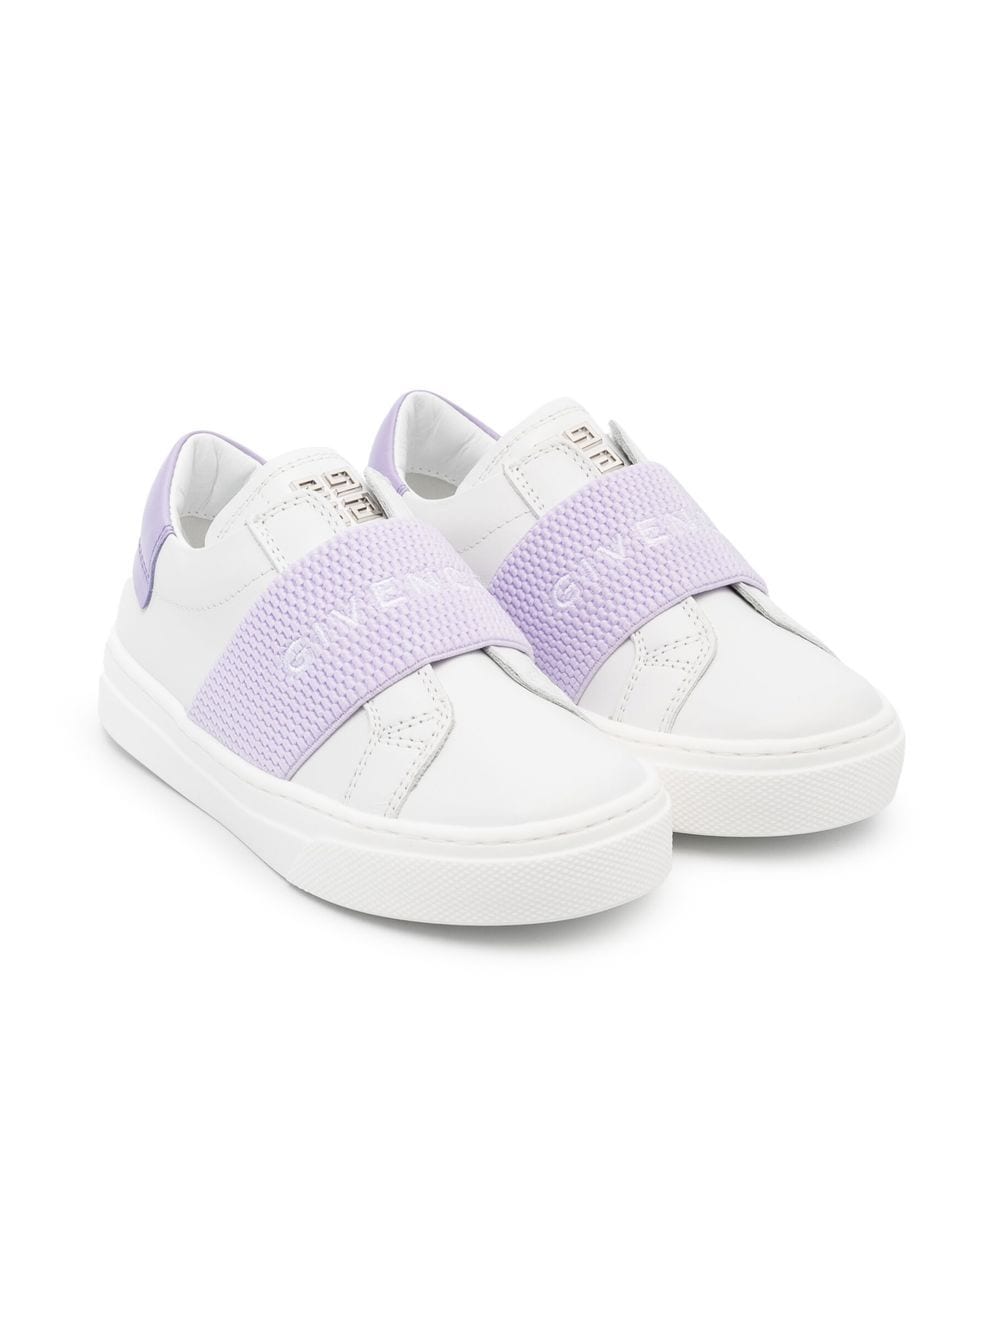 Givenchy Kids' Logo刺绣套穿式运动鞋 In Bianco/lilla